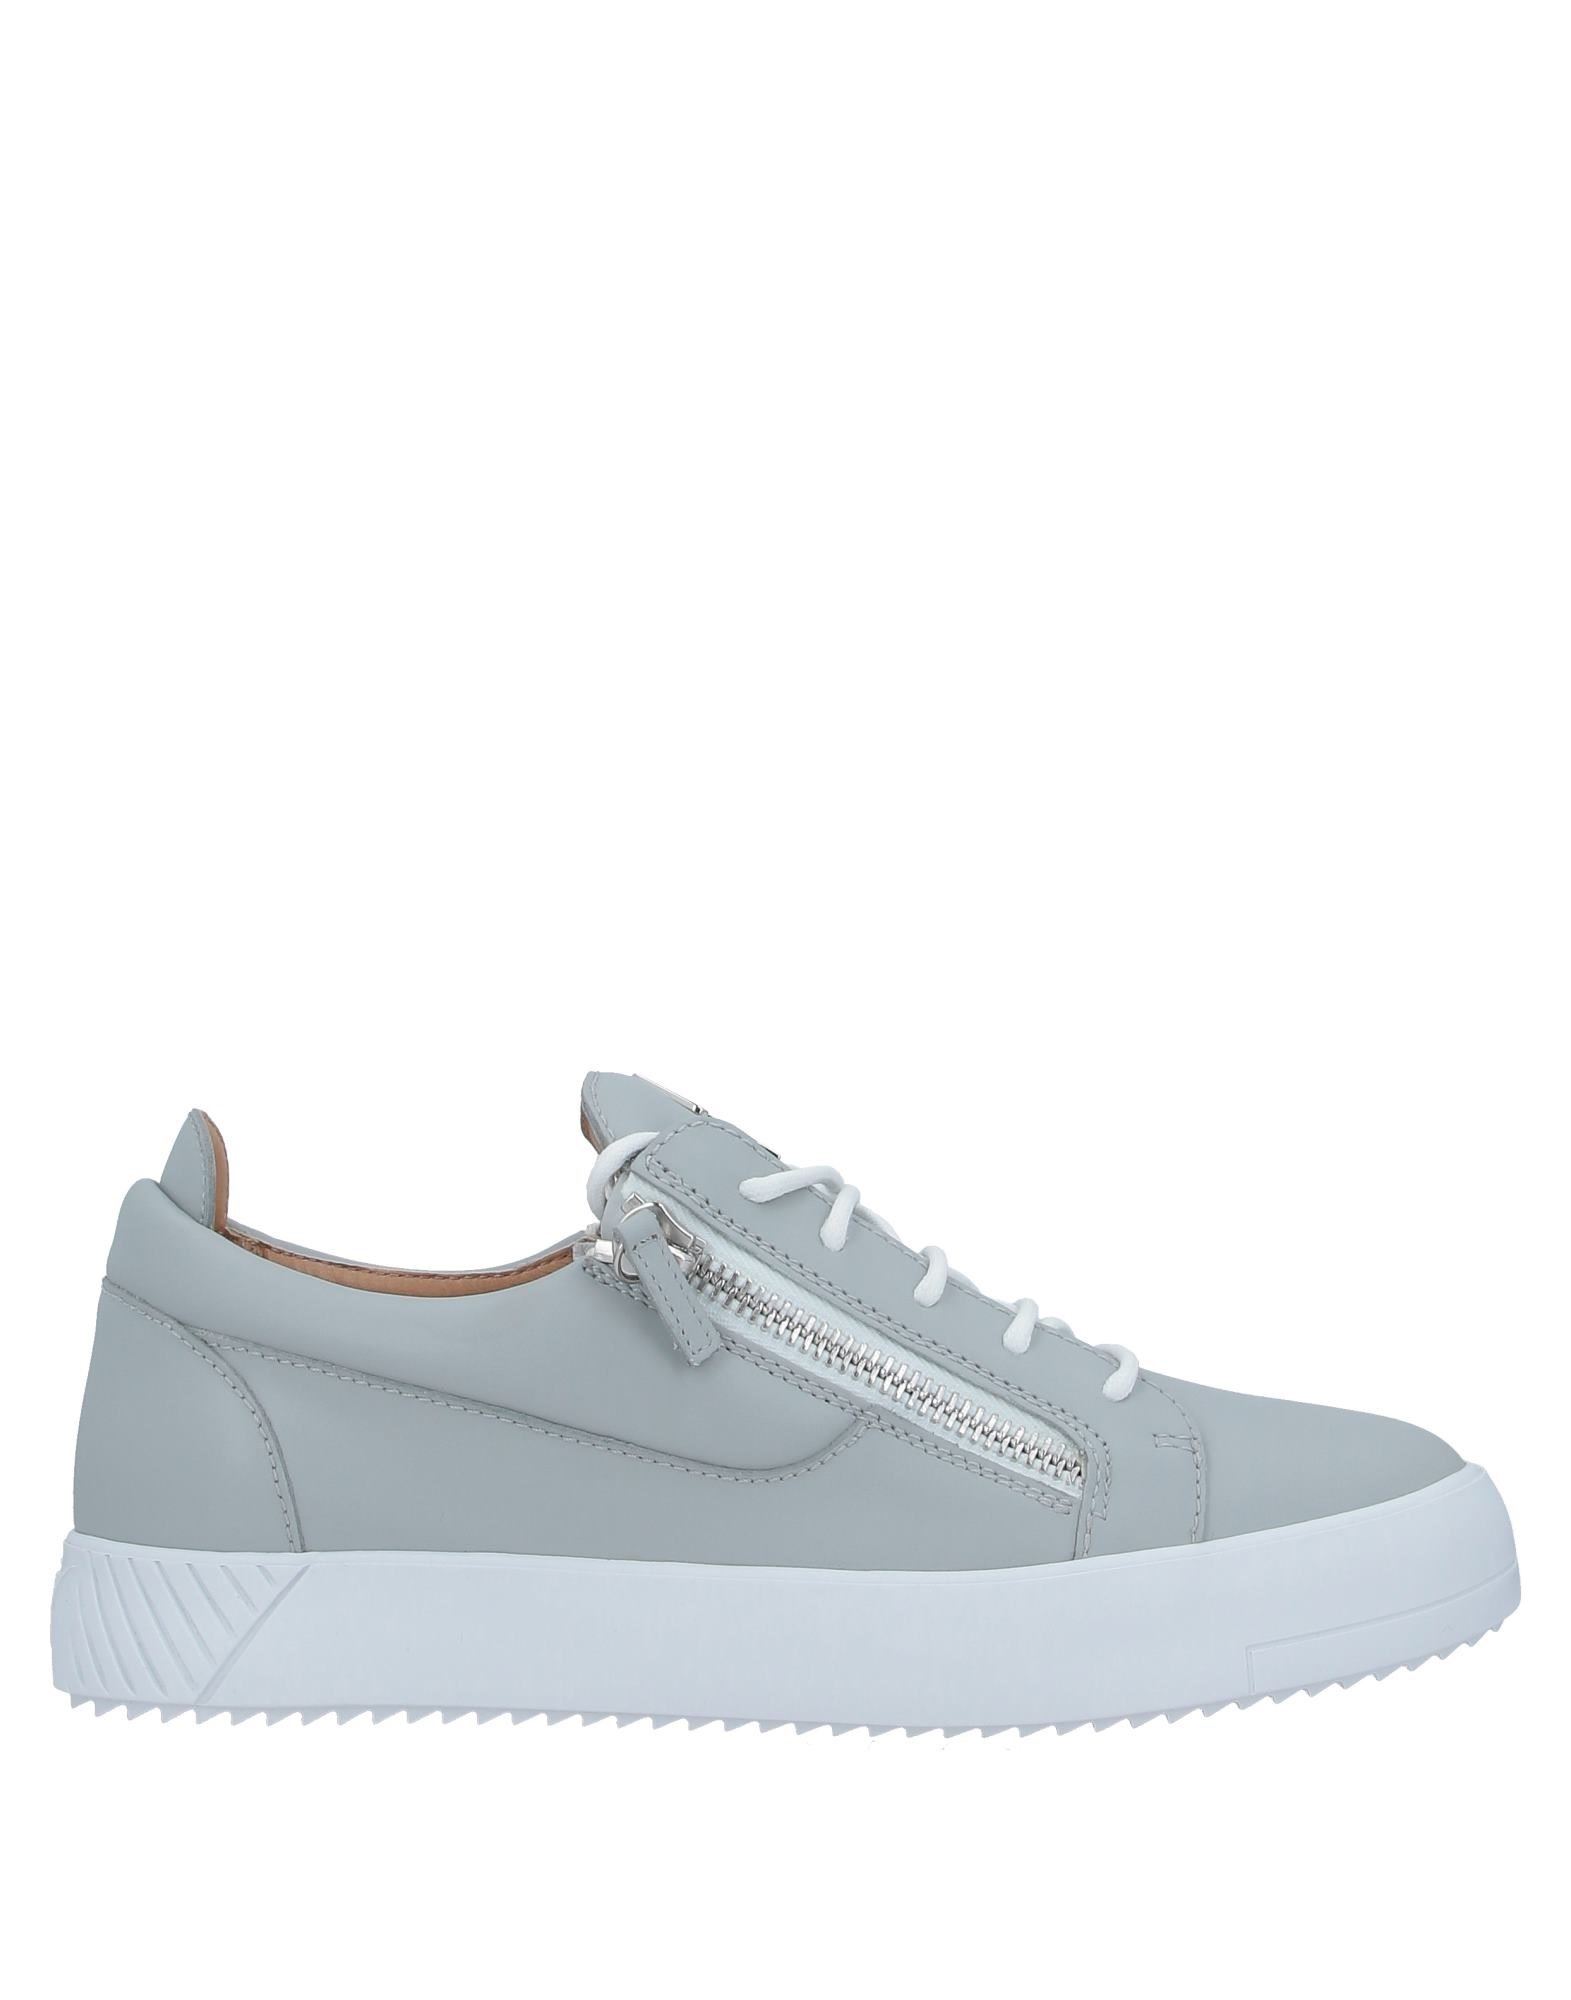 Zanotti Sneakers In Light Grey | ModeSens